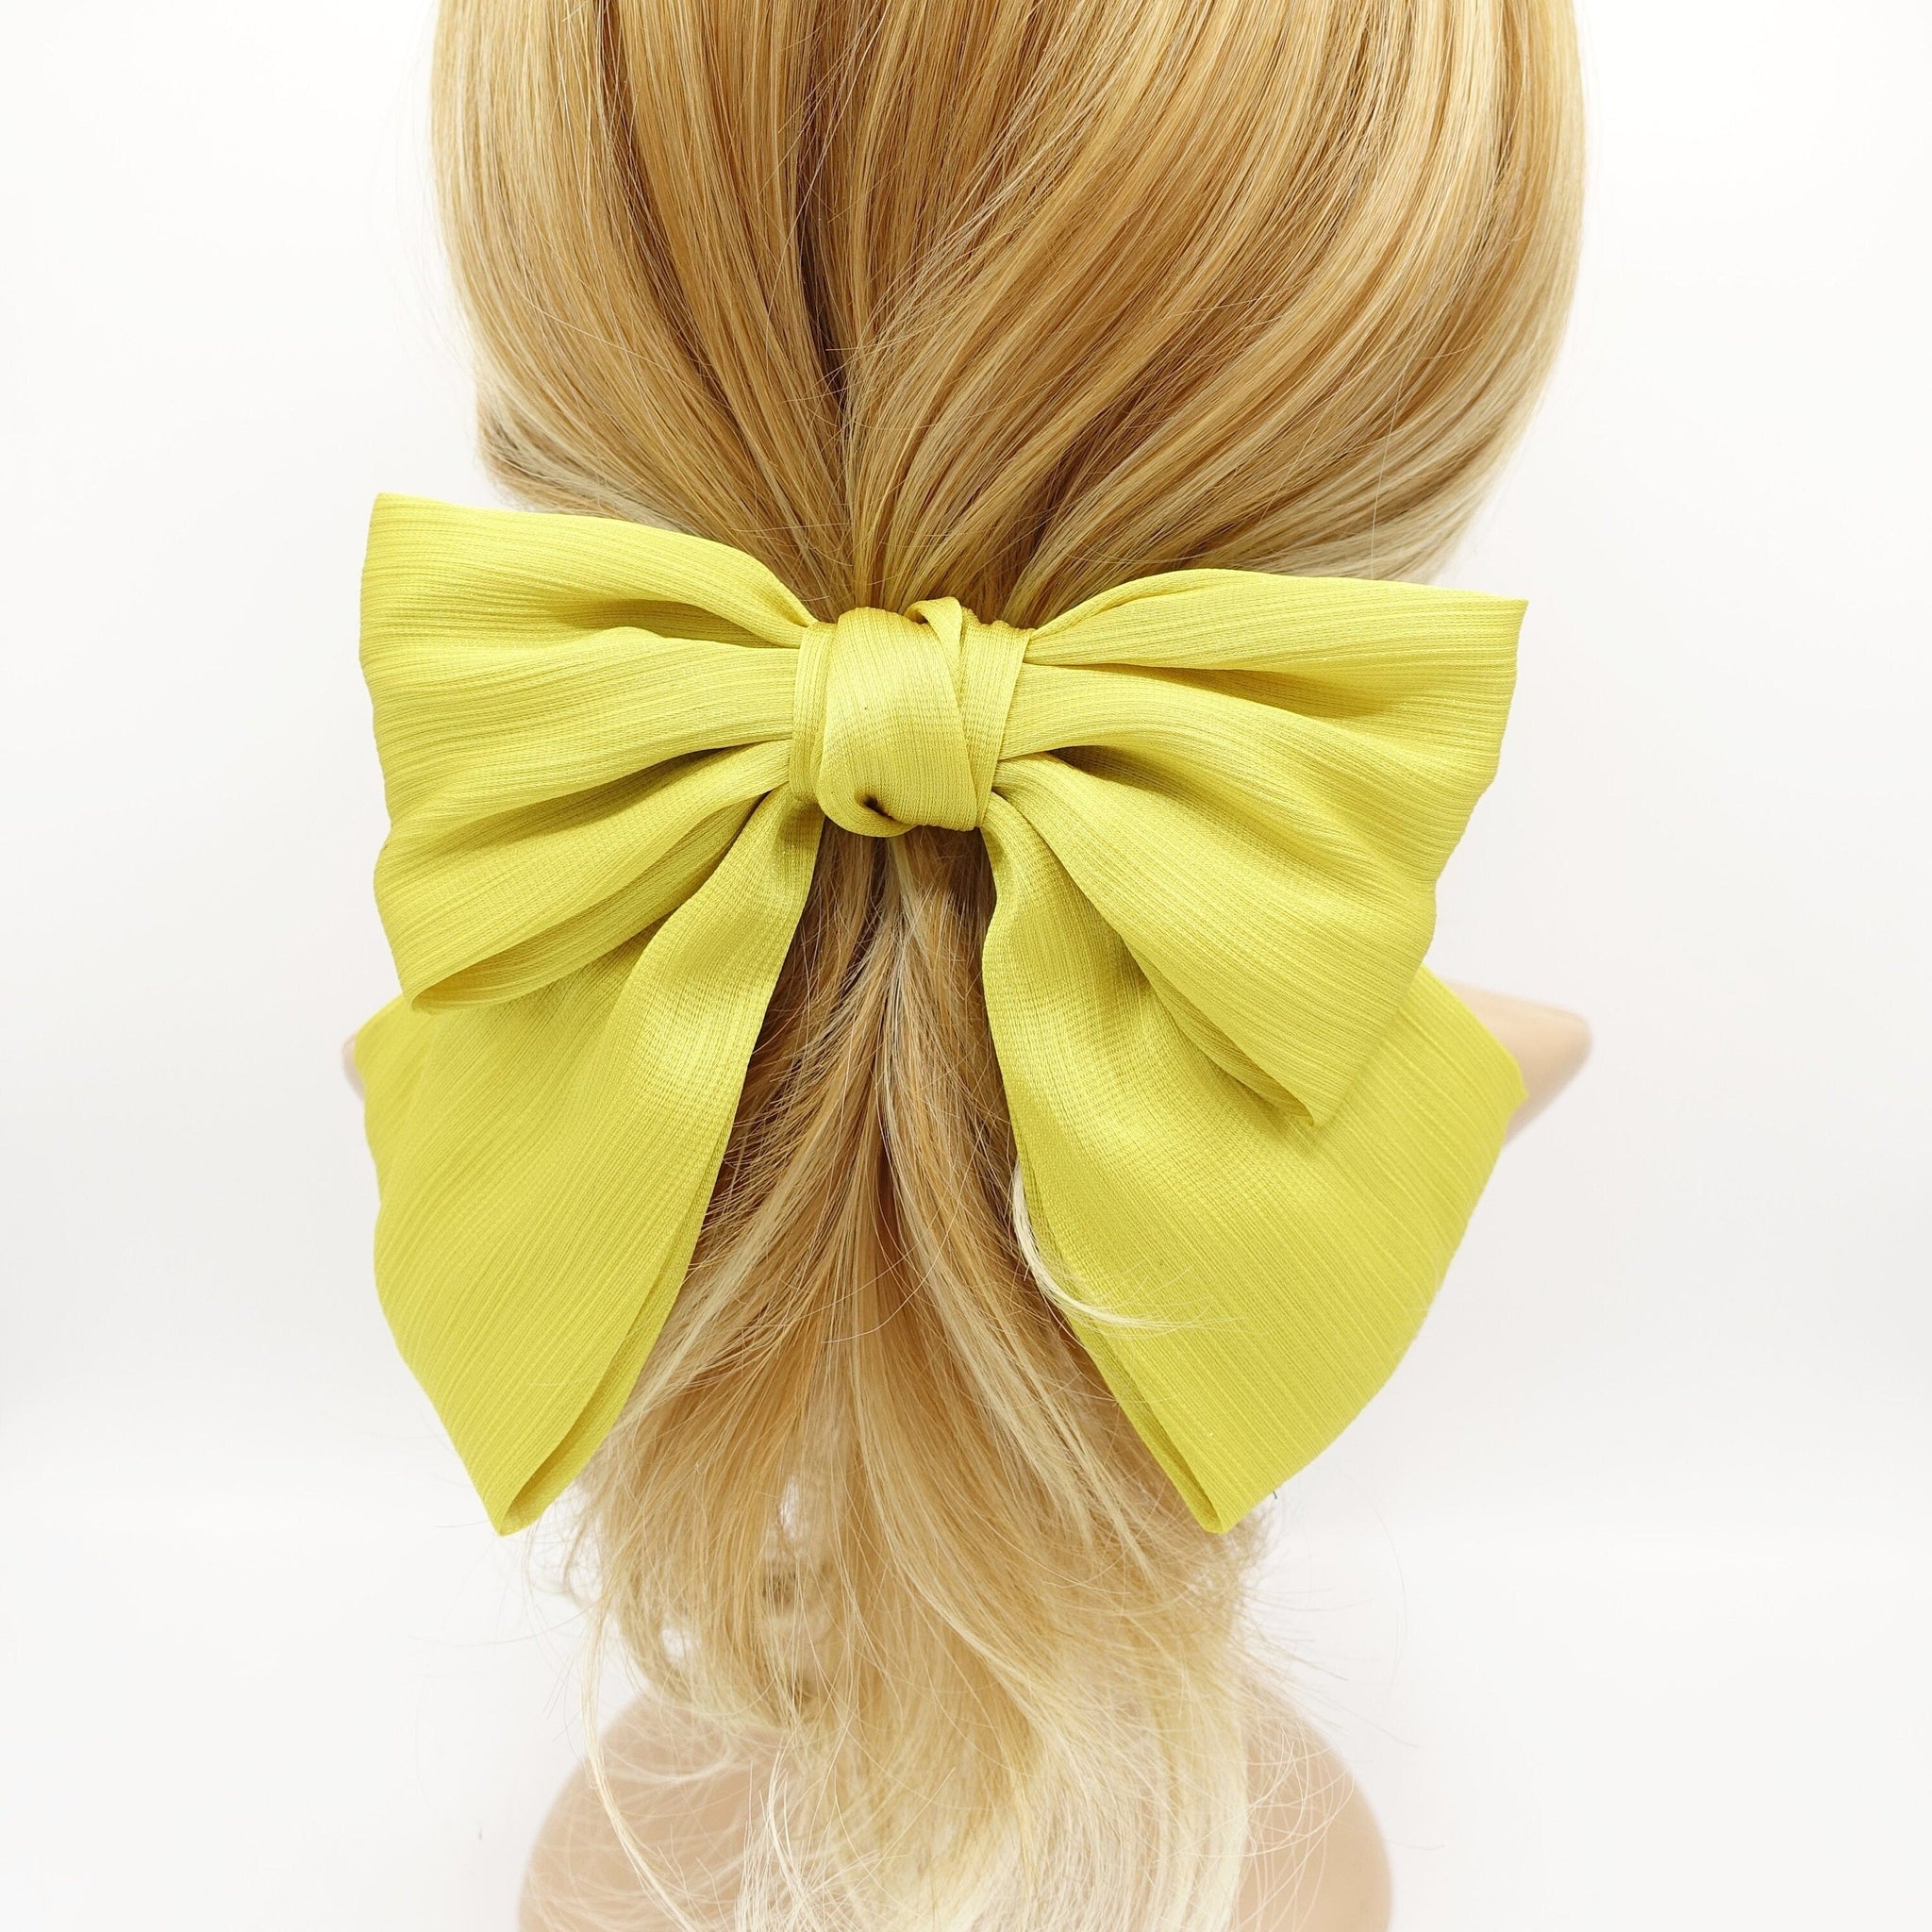 veryshine.com Barrette (Bow) Lemon pearl glossy crinkled satin bow french hair barrette women hair accessory